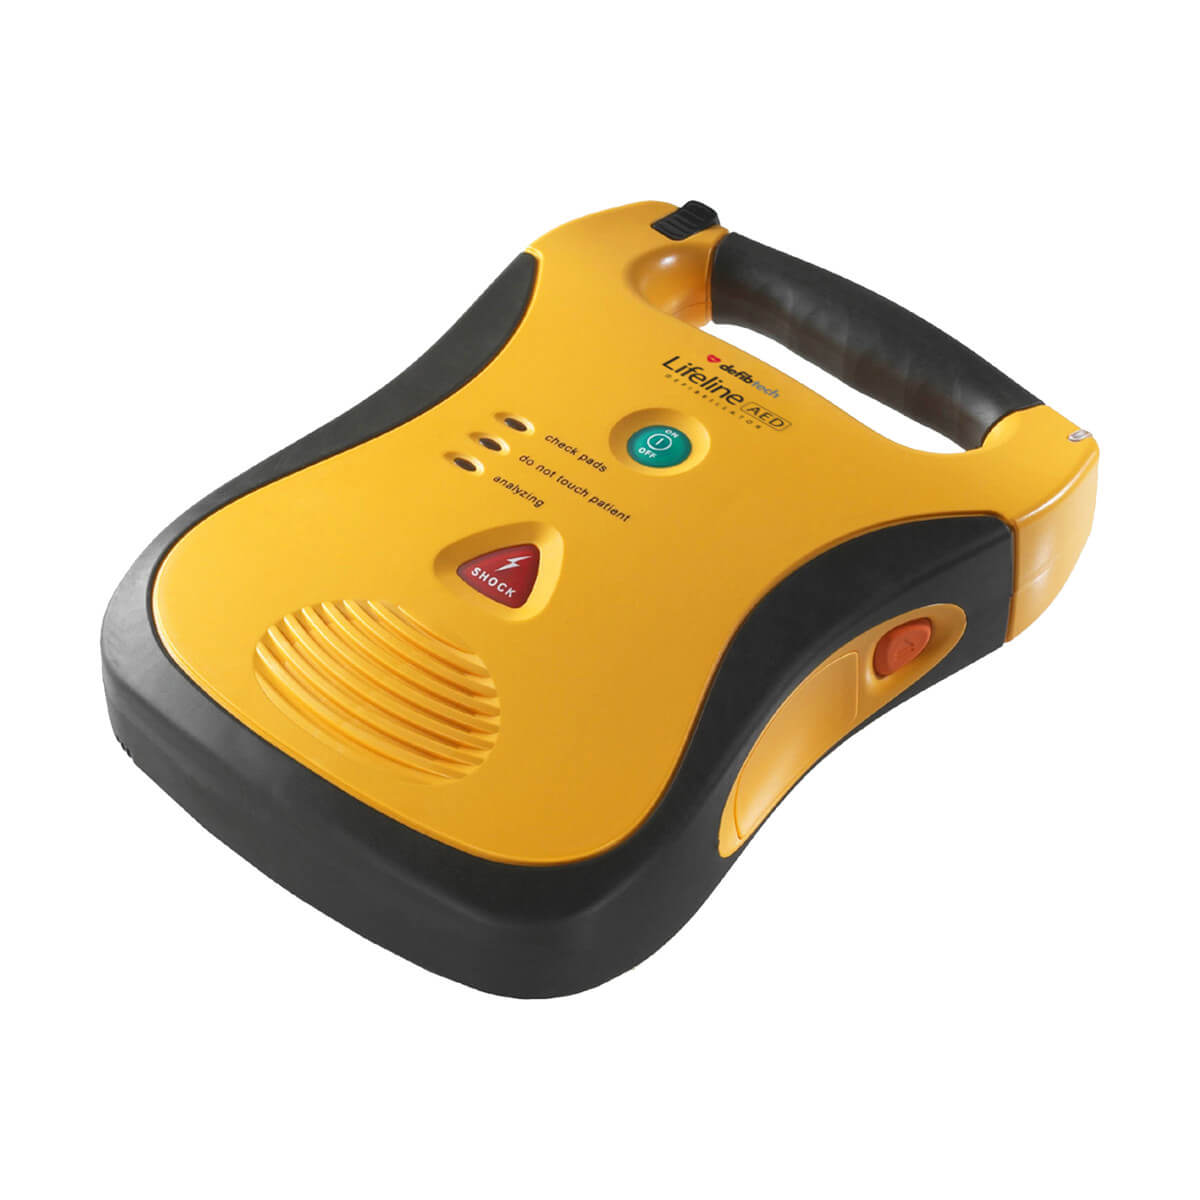 Defibrylator AED Defibtech Lifeline AED z 7-letnią baterią